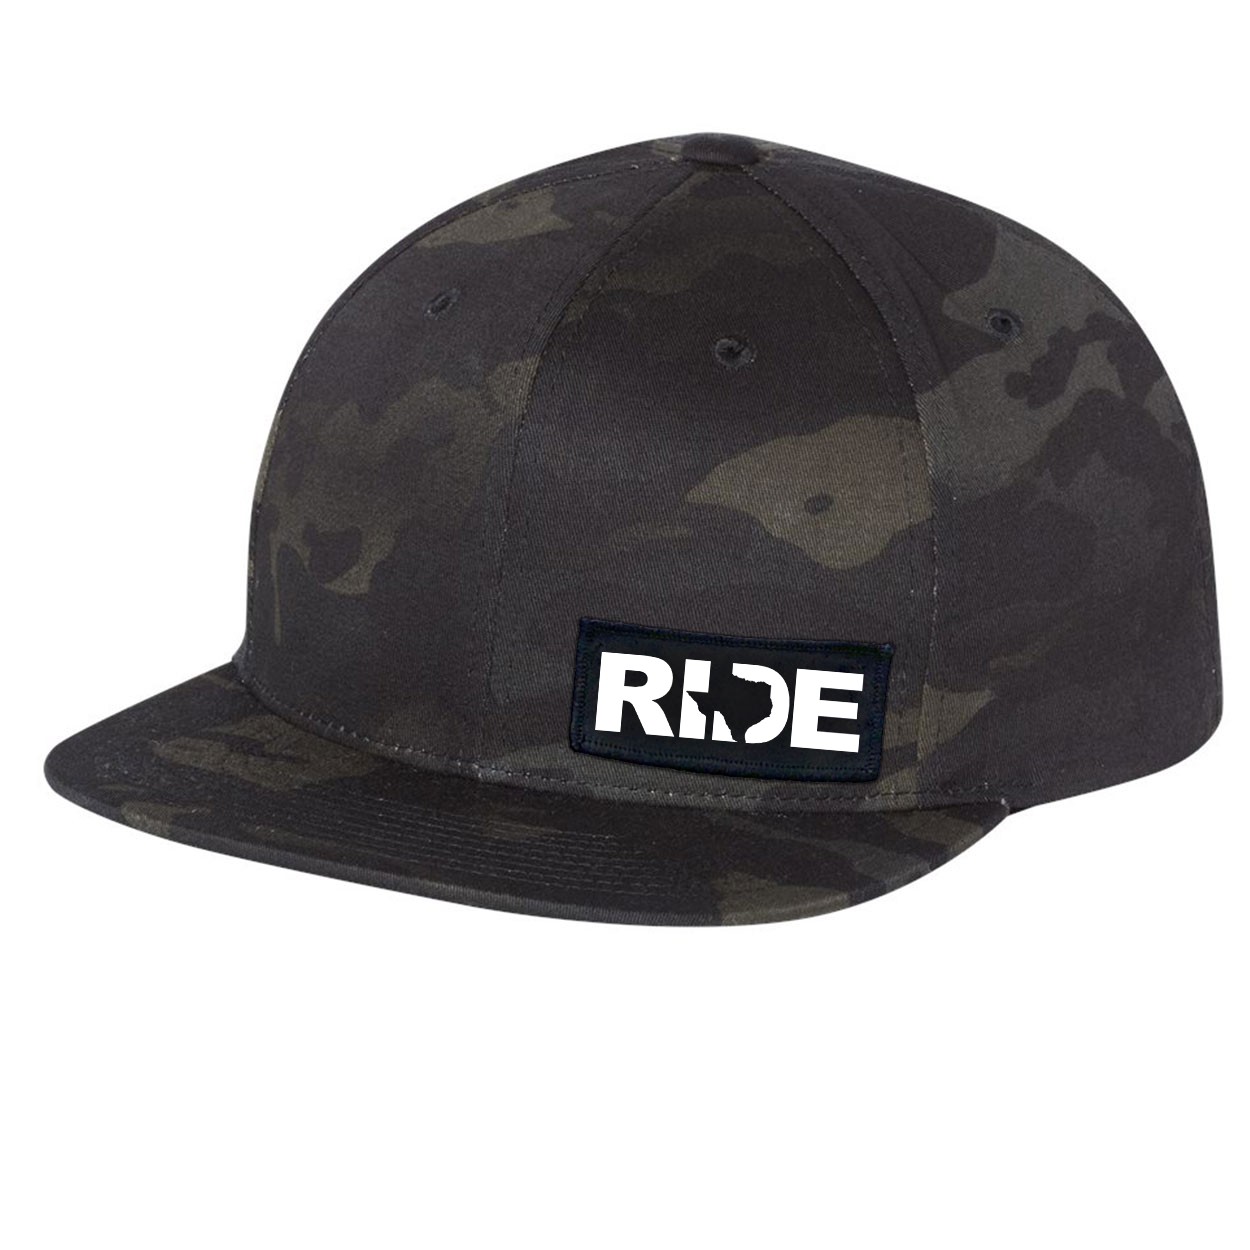 Ride Texas Night Out Woven Patch Flat Brim Snapback Hat Black Camo (White Logo)